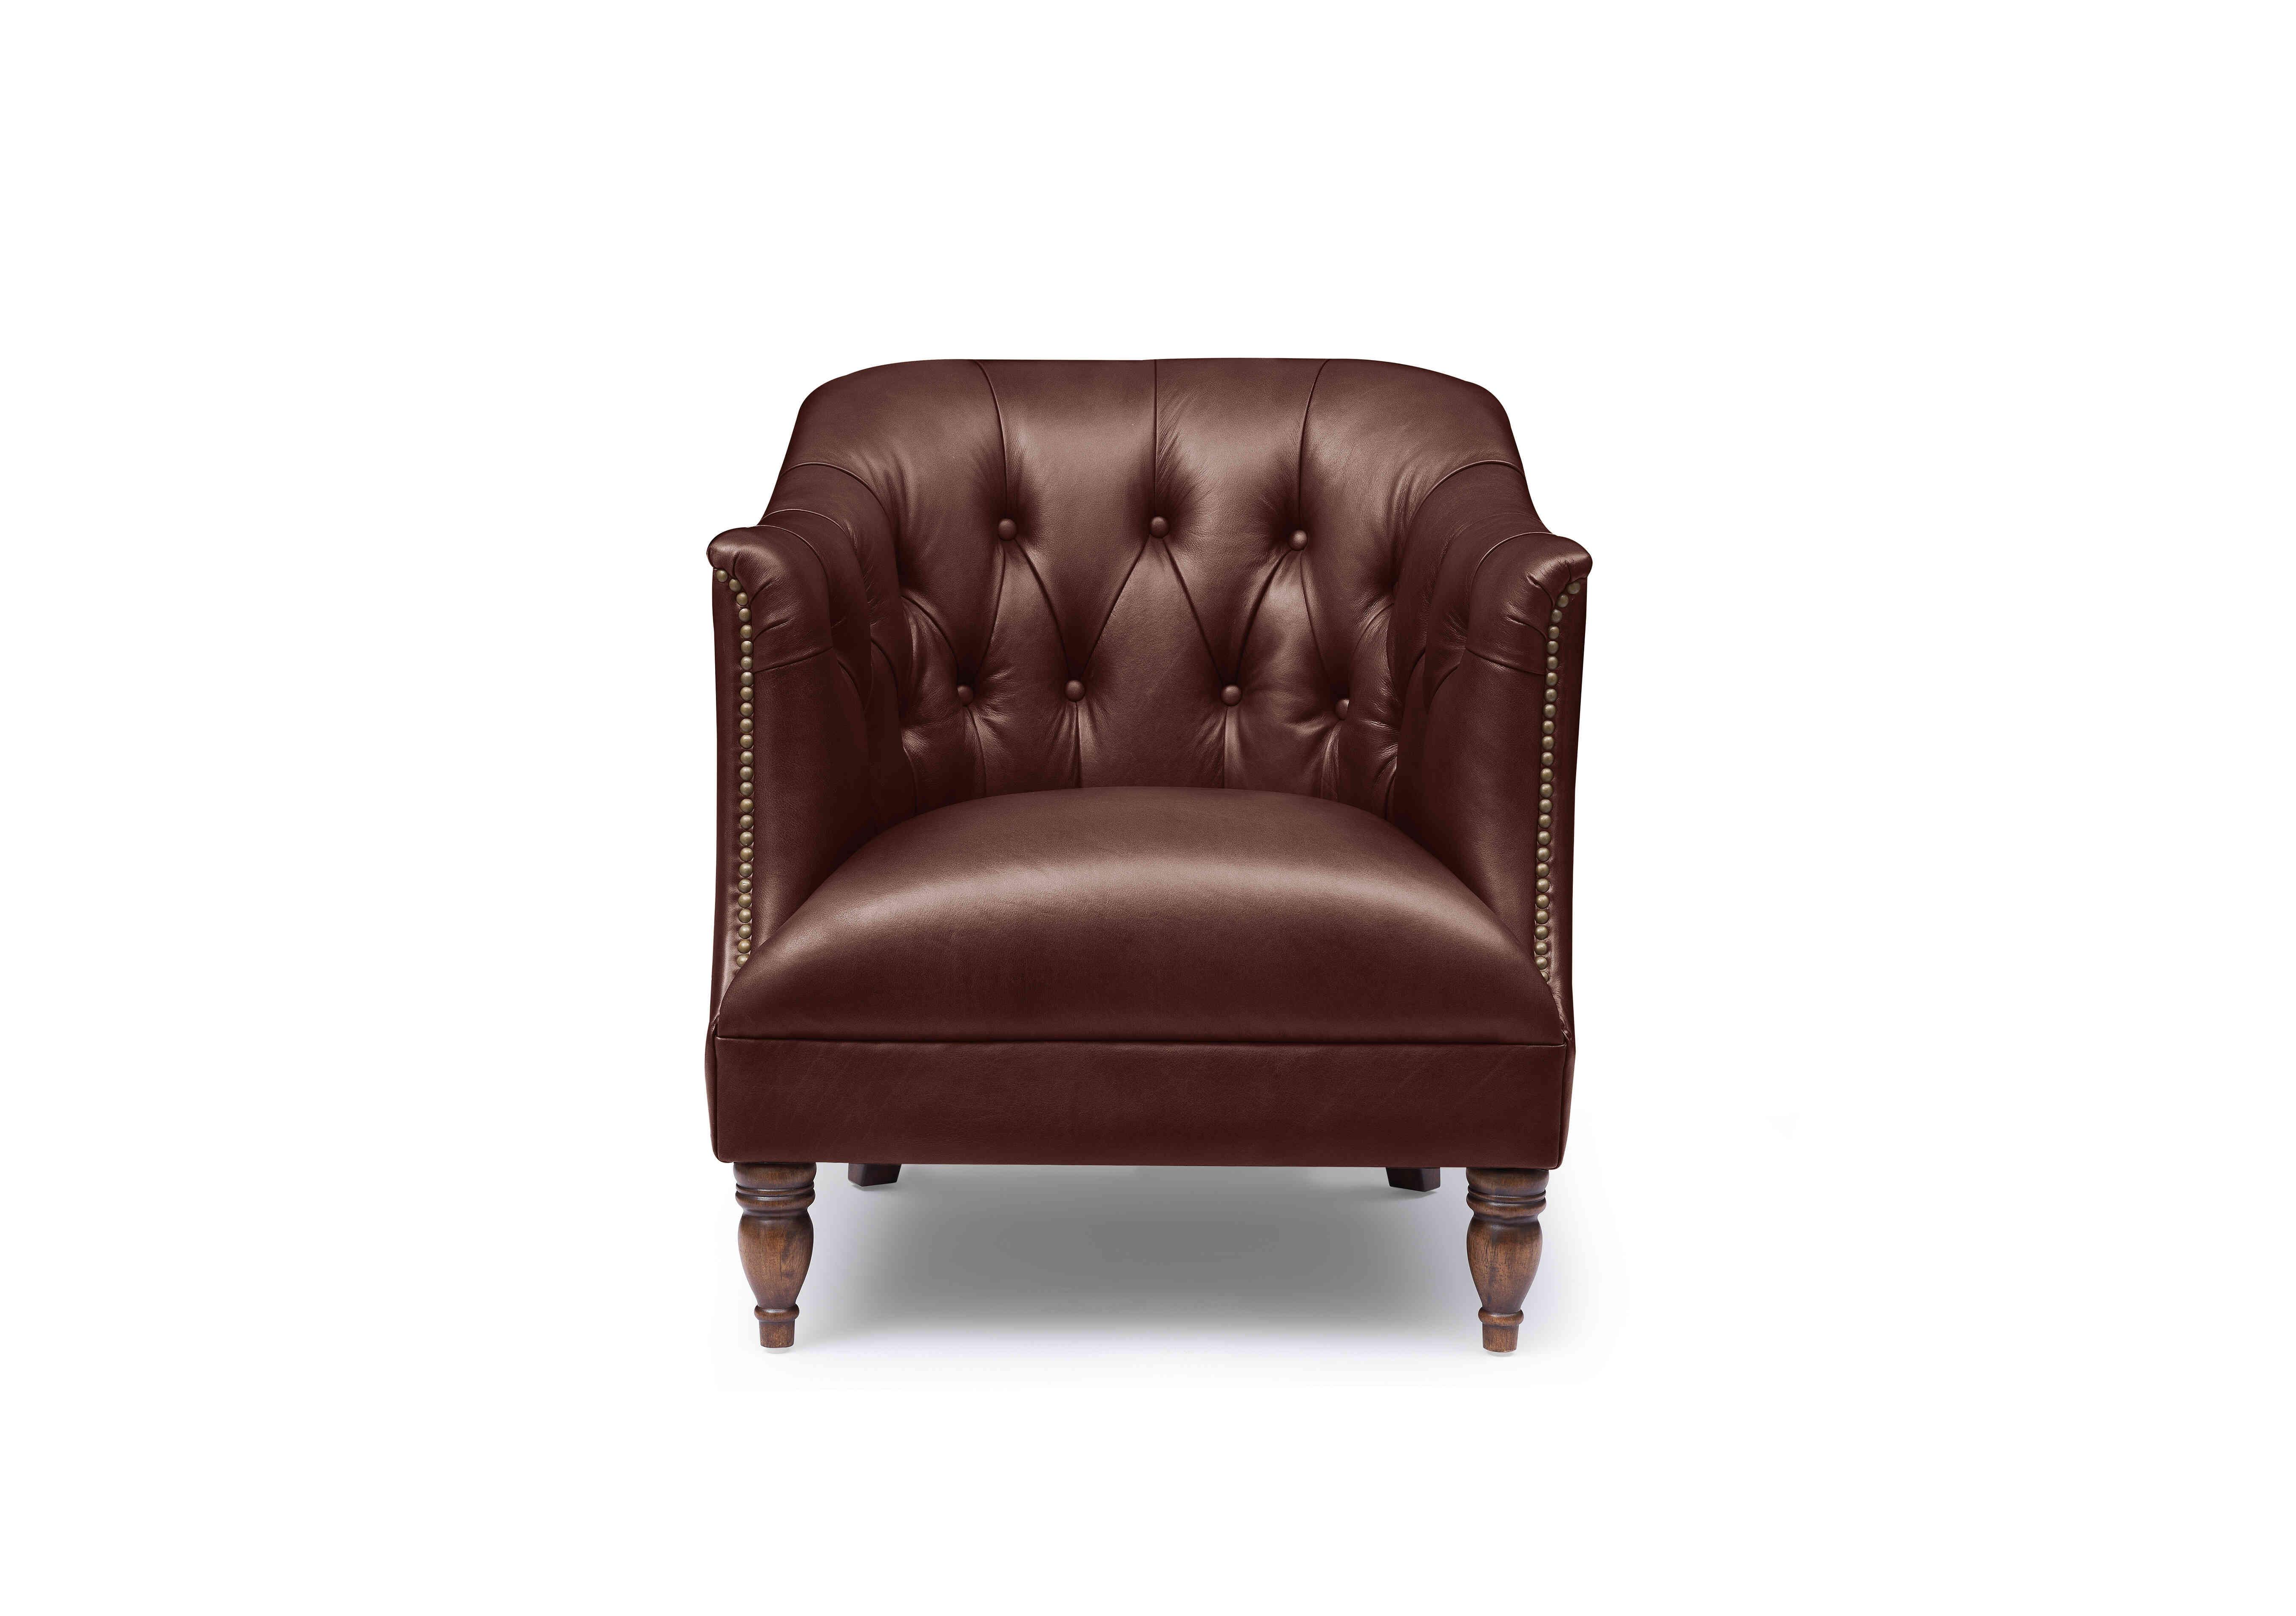 Henson Leather Tub Chair in X3y1-1964ls Merlot on Furniture Village